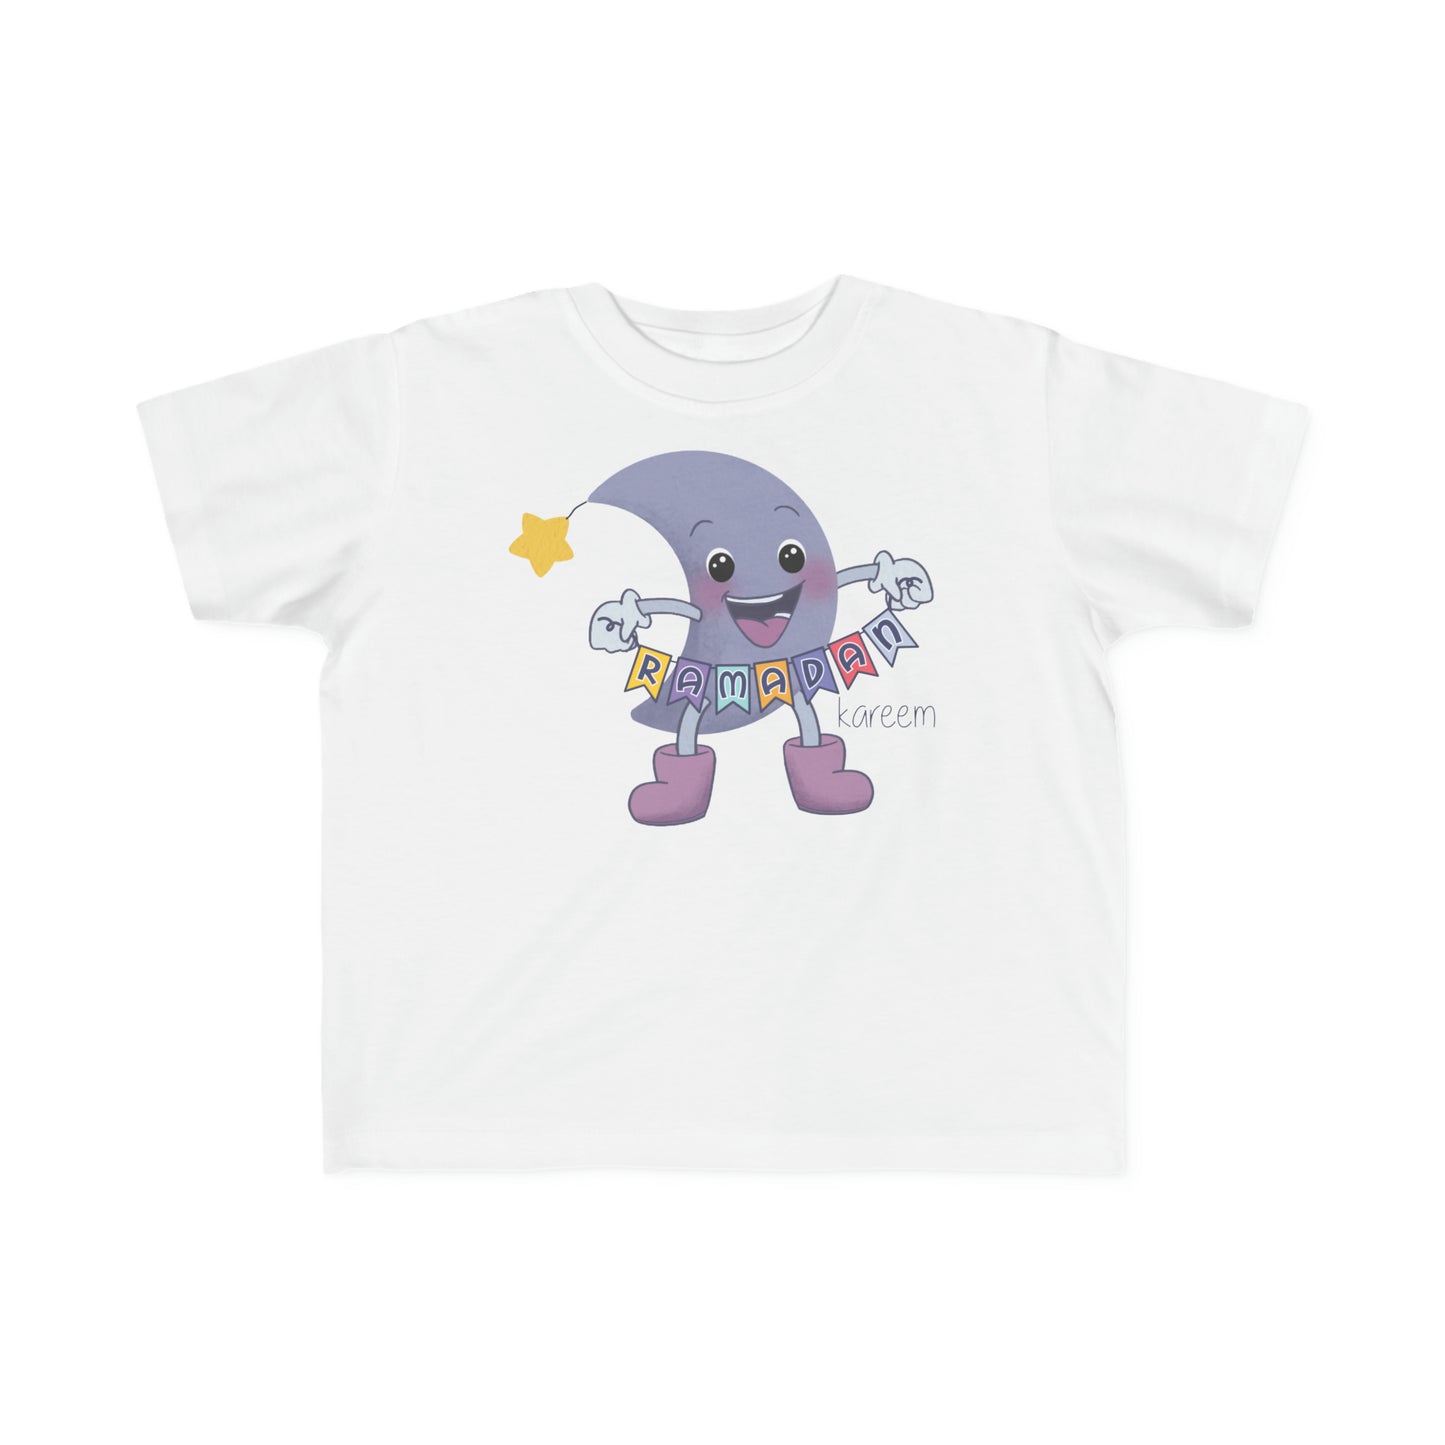 RAMADAN KAREEM Toddler T-Shirt